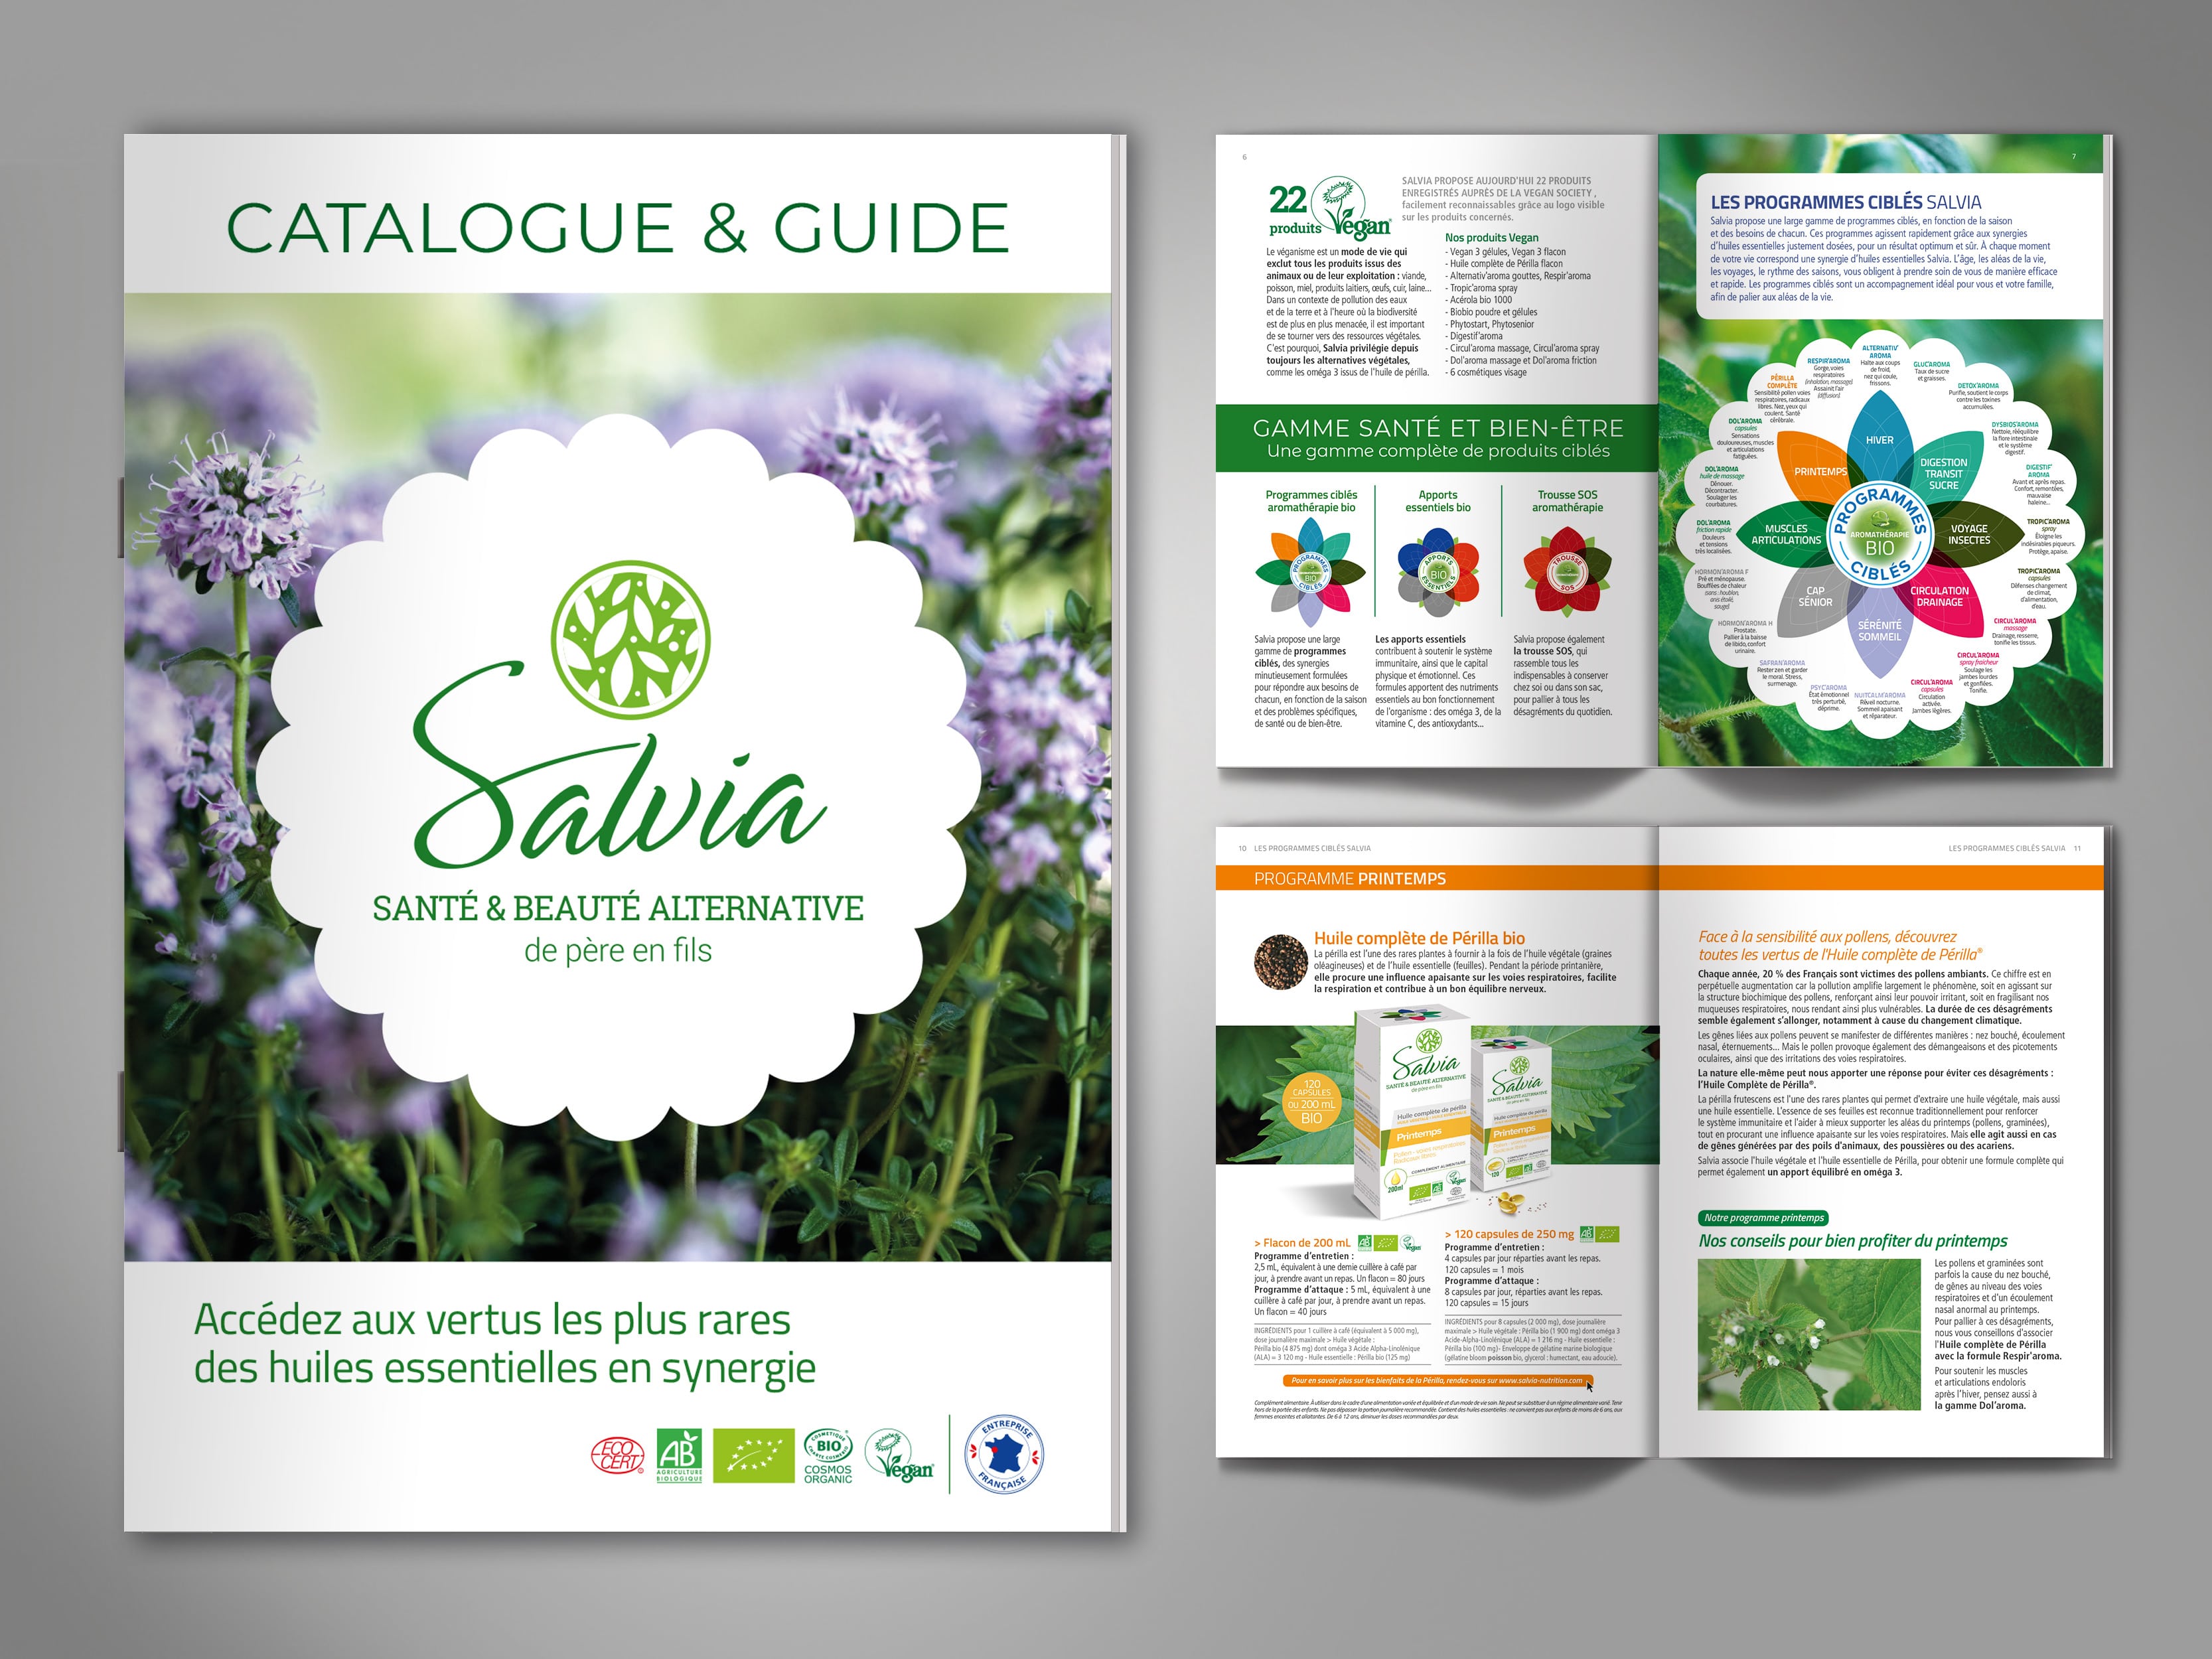 SALVIA nutrition, santé & beauté alternative Bio